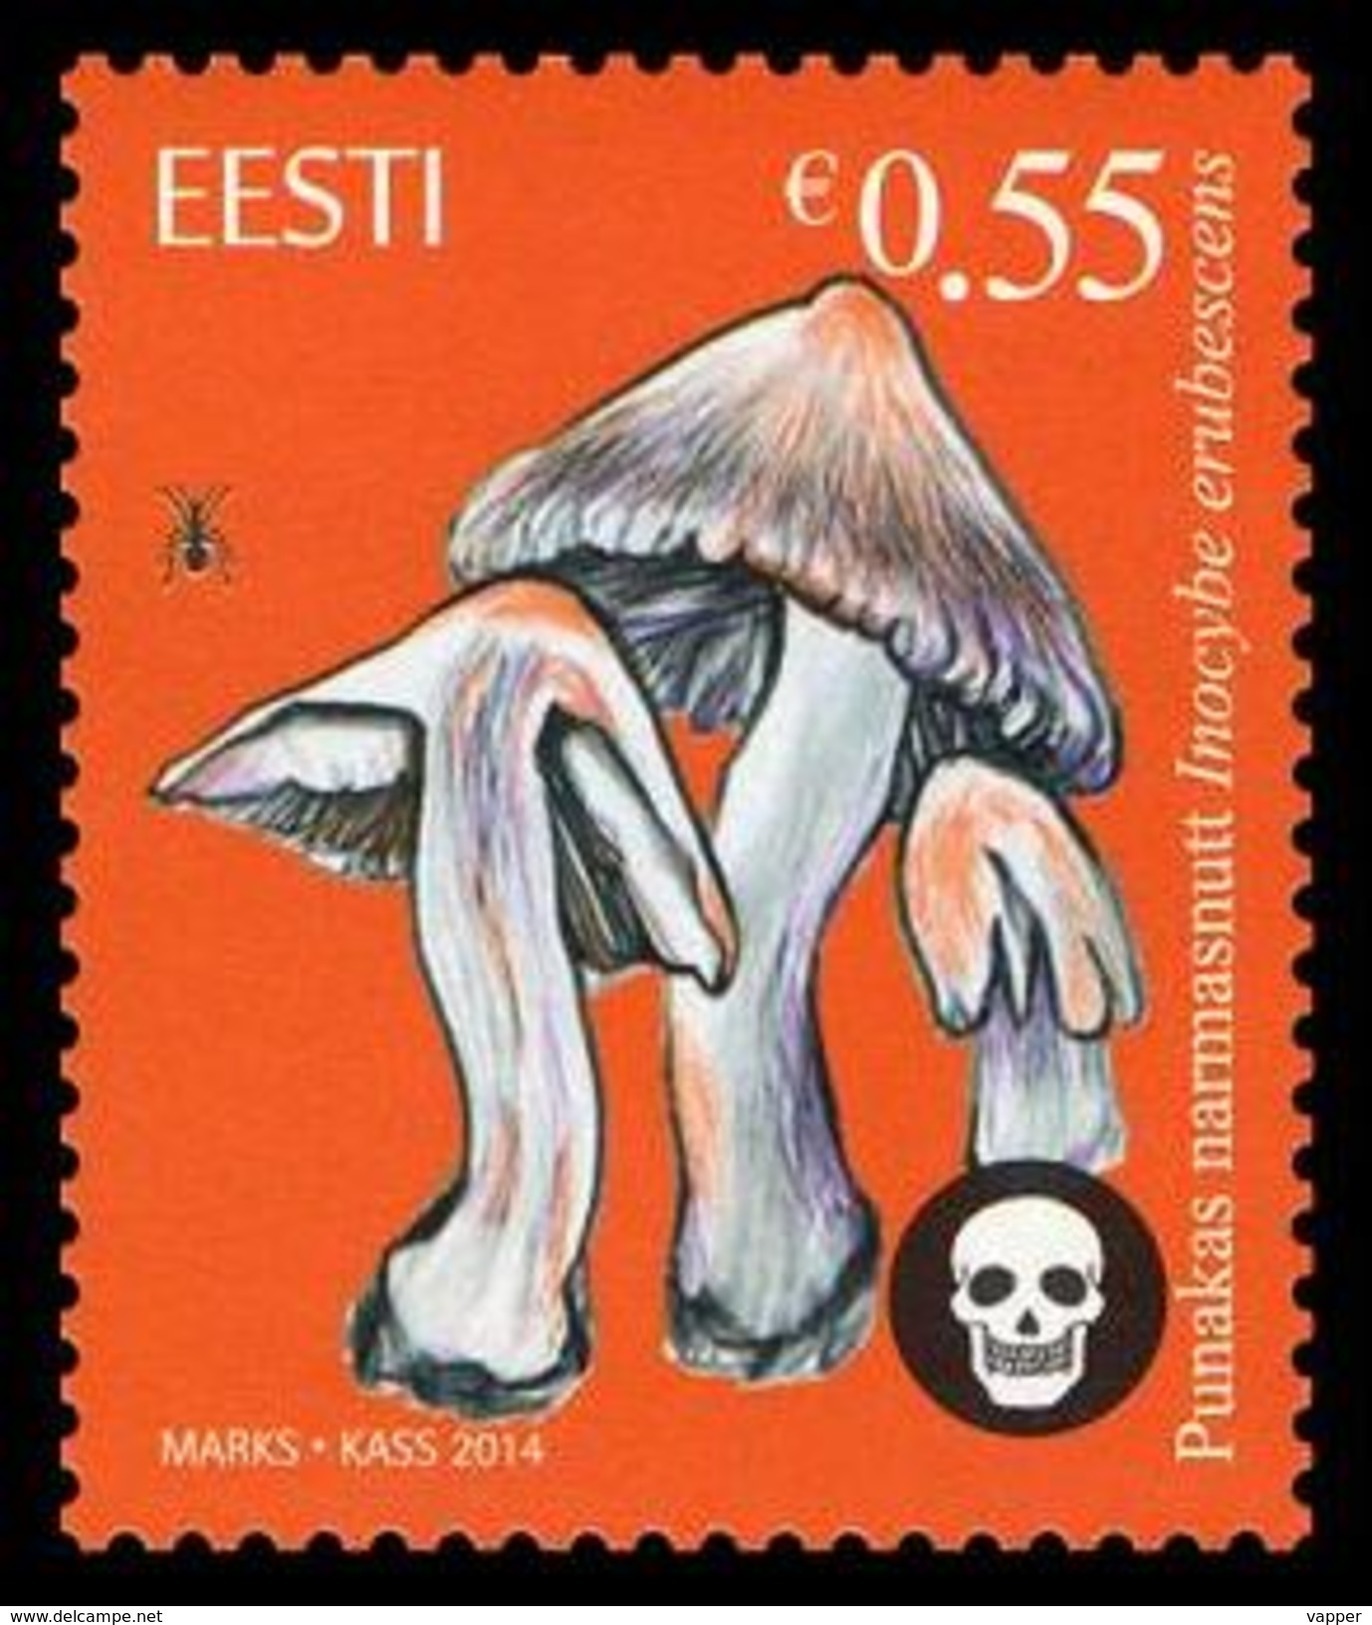 Estonian Mushrooms - Deadly Fibrecap  2014 Estonia MNH Stamp Mi 805 - Champignons